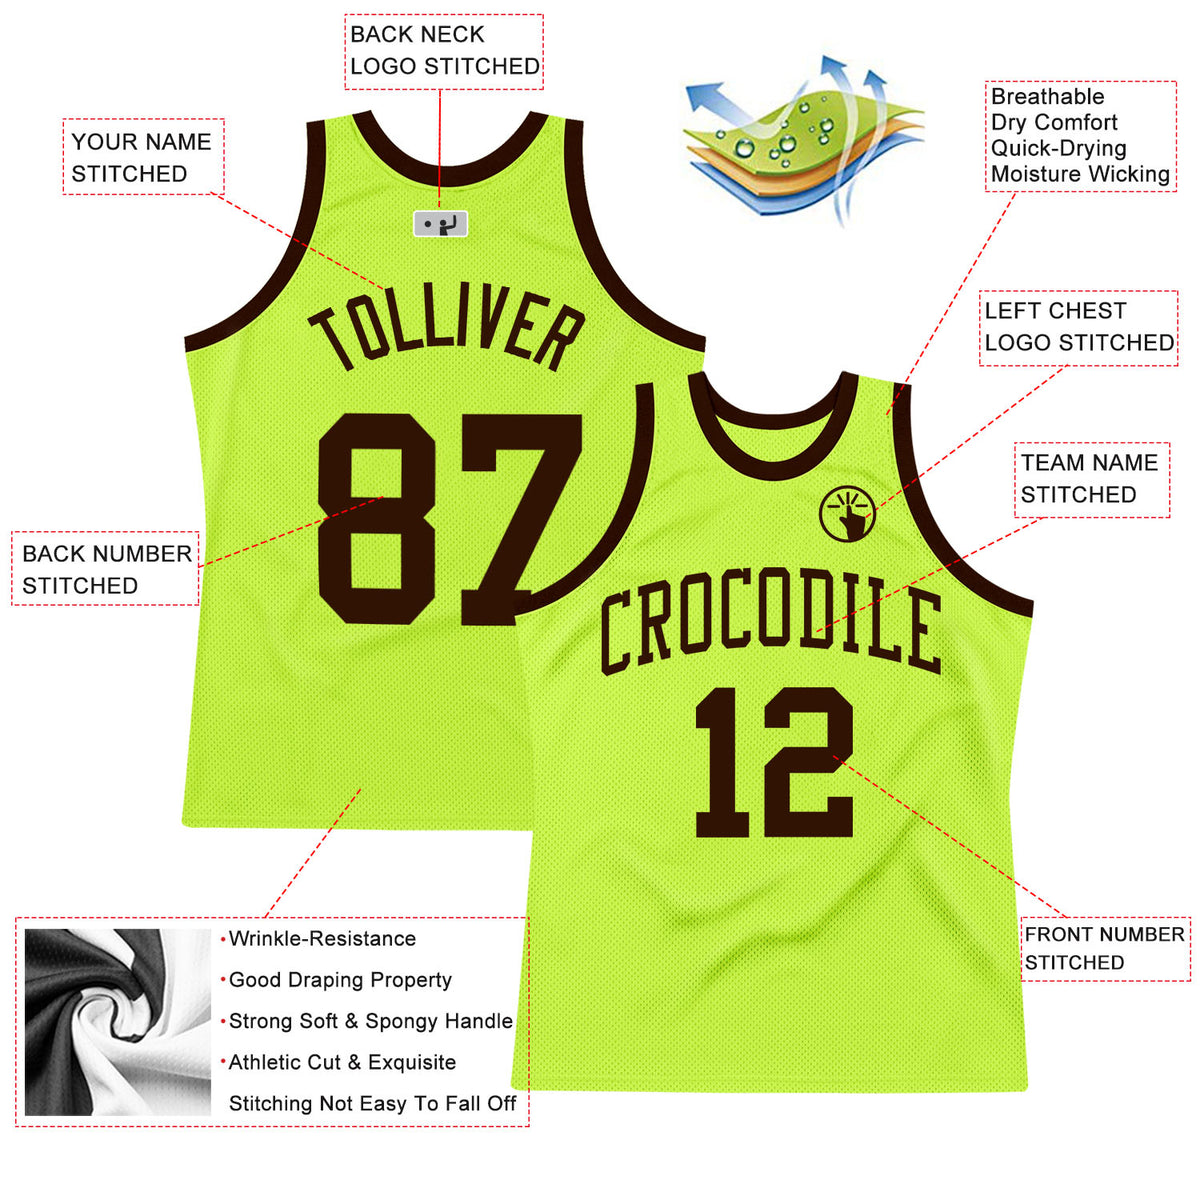 Custom Neon Green Basketball Jerseys, Basketball Uniforms For Your Team